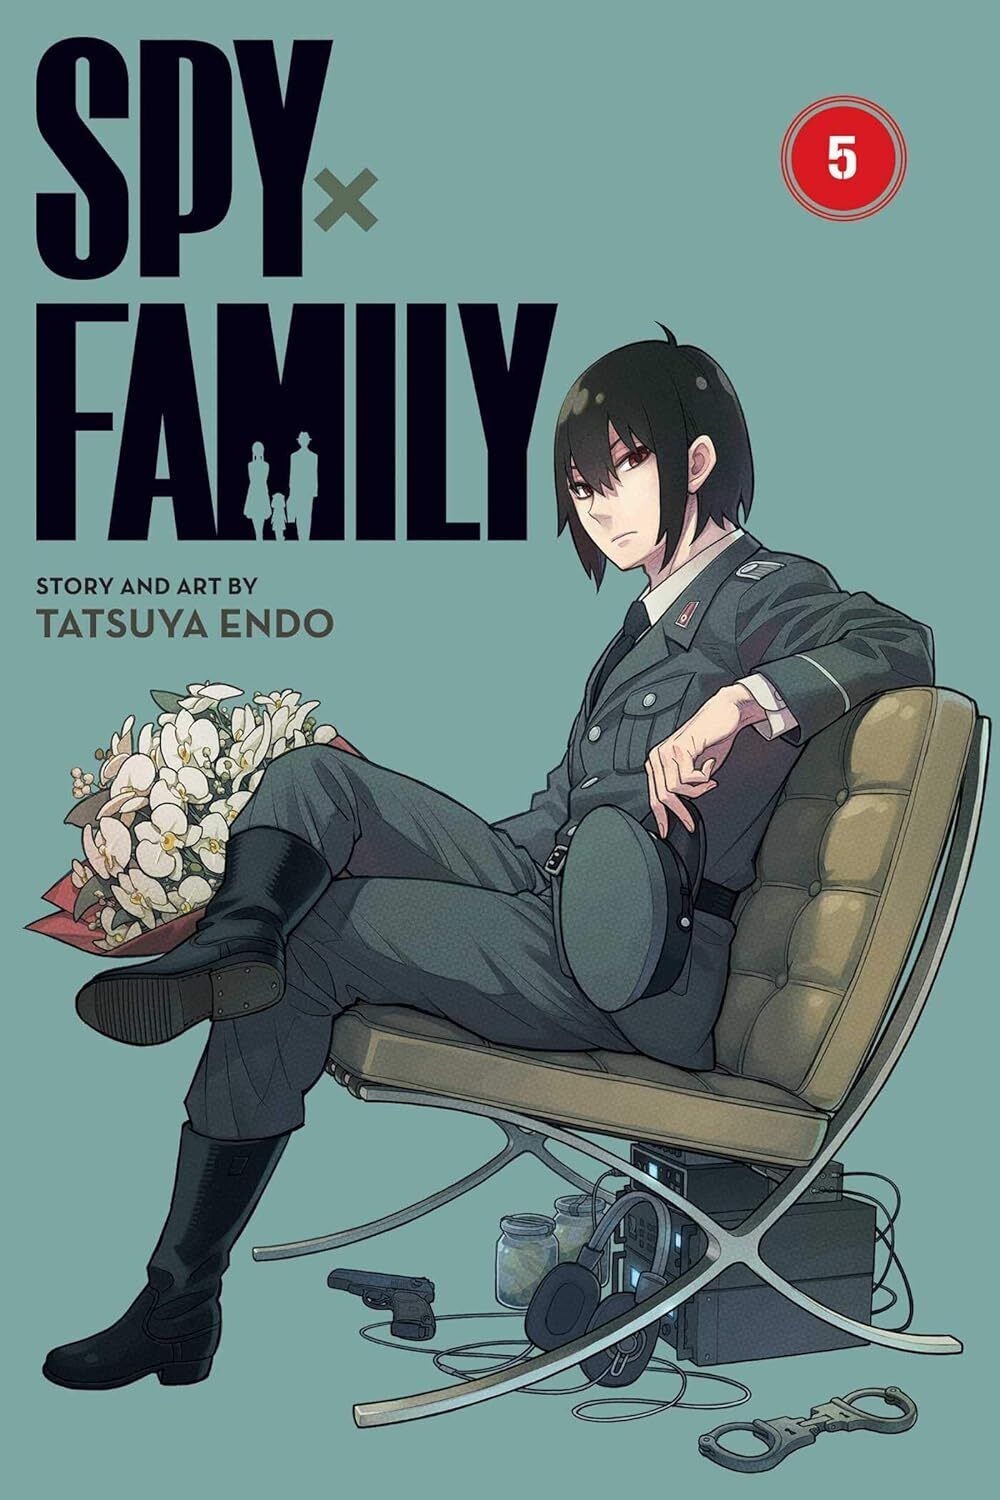 Spy Family Vol. 5 Paperback English Manga Official Viz Media Collectible Anime